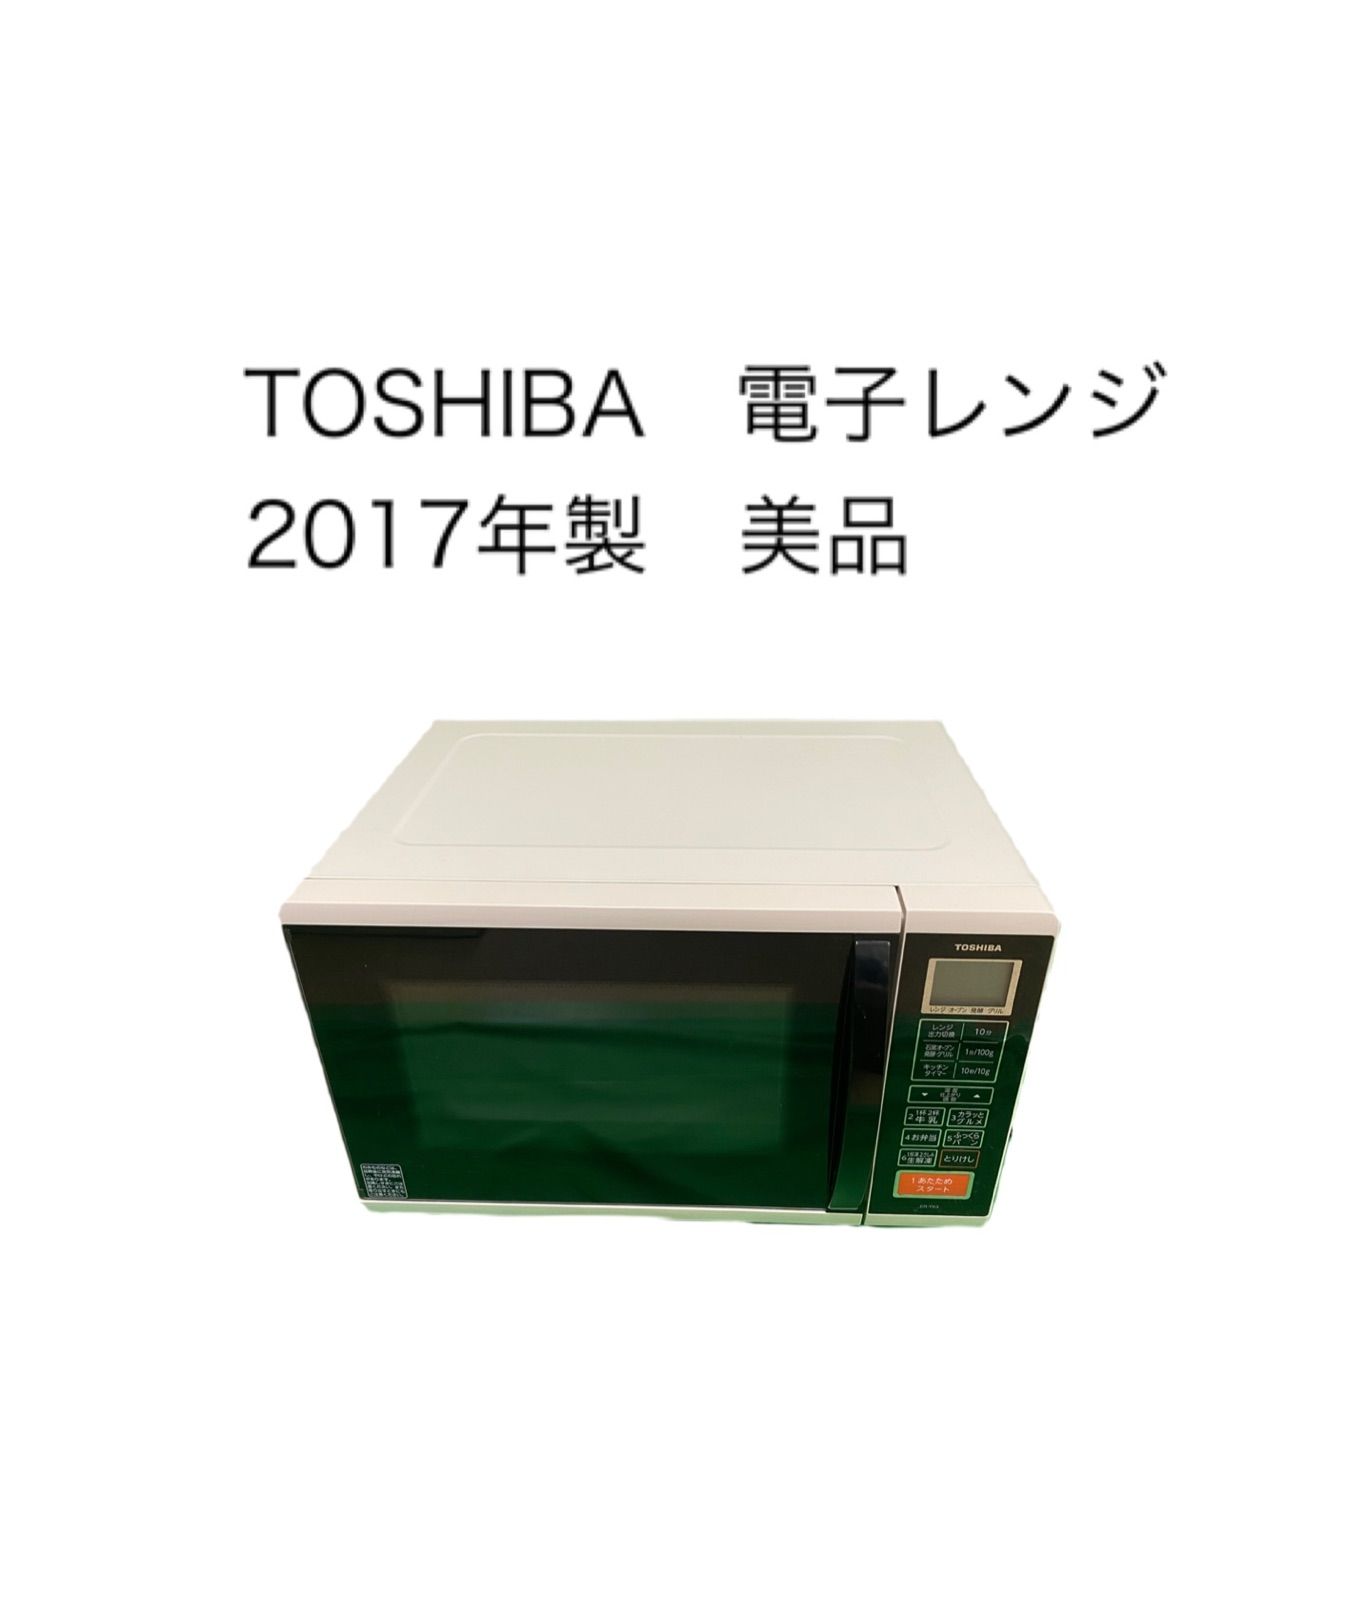 TOSHIBA 電子レンジ 2017年製 ER-YK3(W) 毎日がバーゲンセール - 電子 